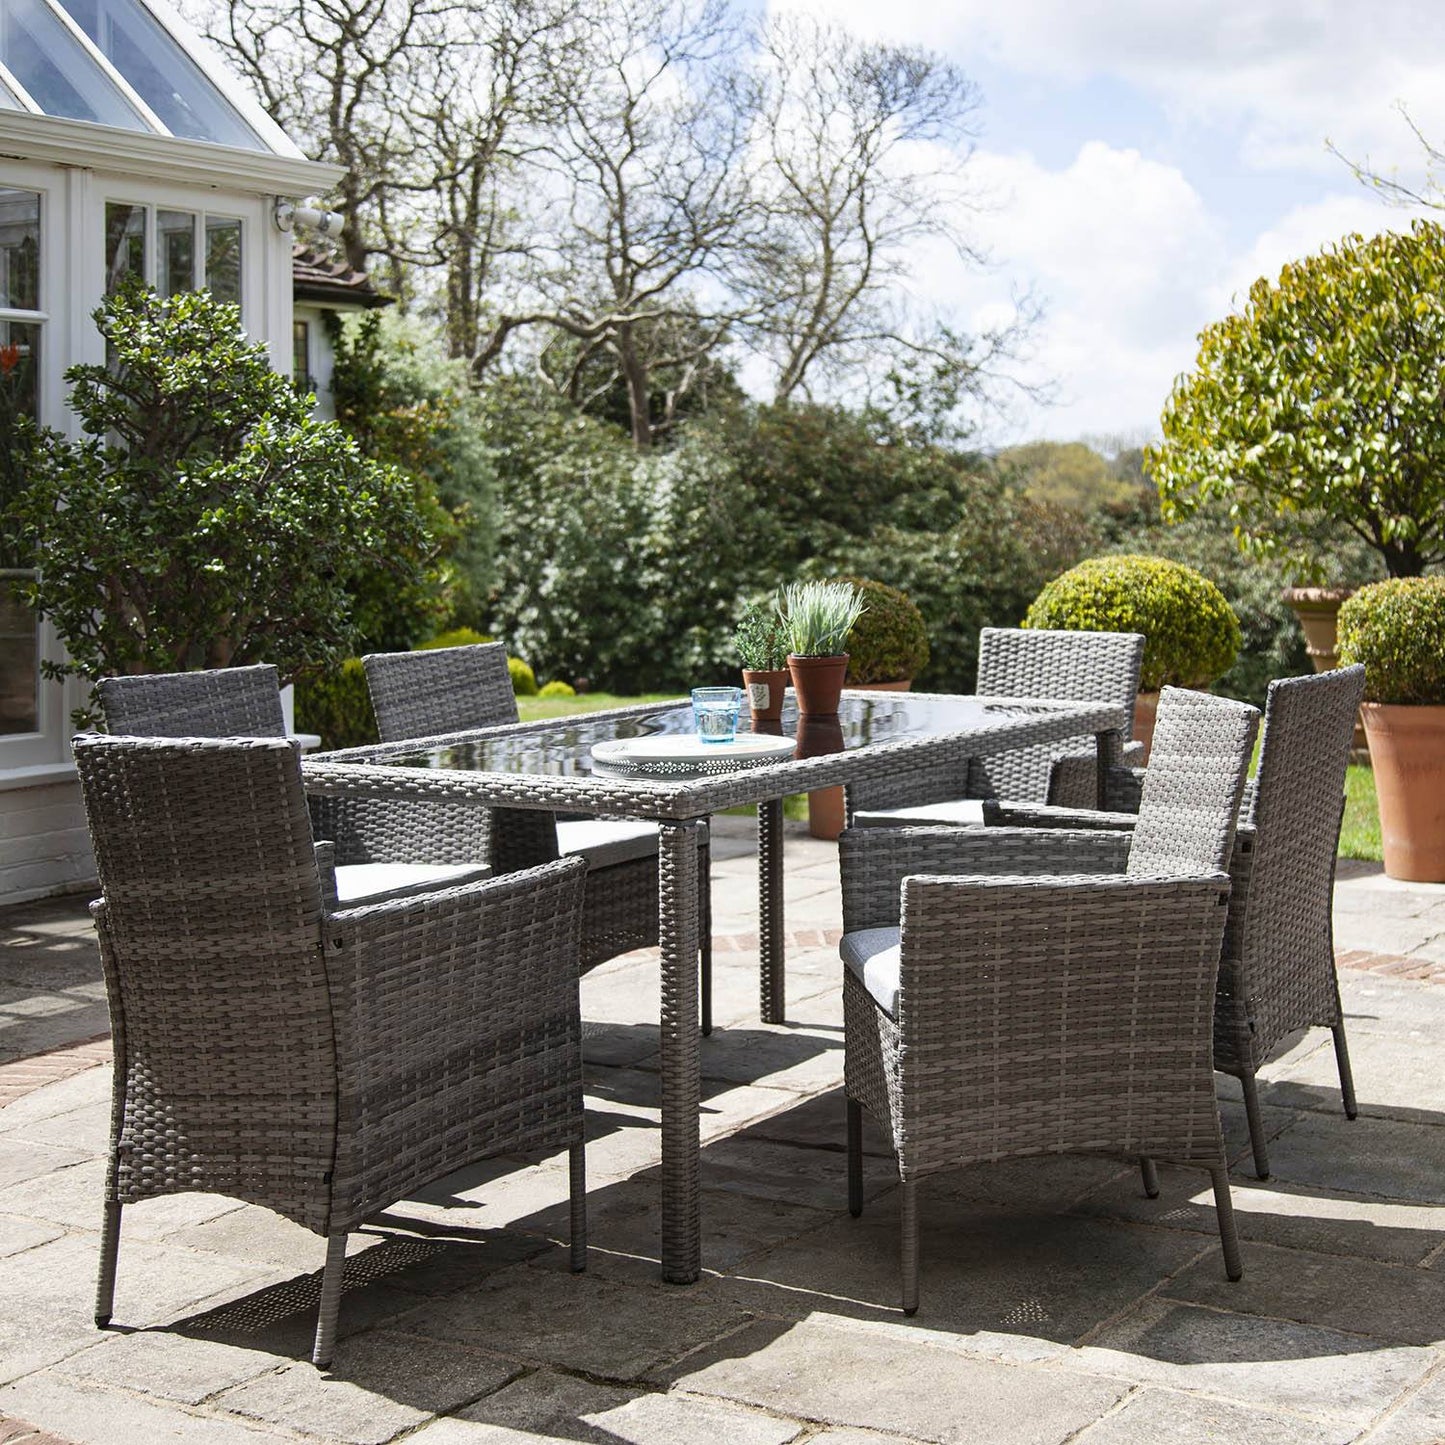 Marston 6 Seater Rattan Dining Set with Grey Parasol - Rattan Garden Furniture - Grey